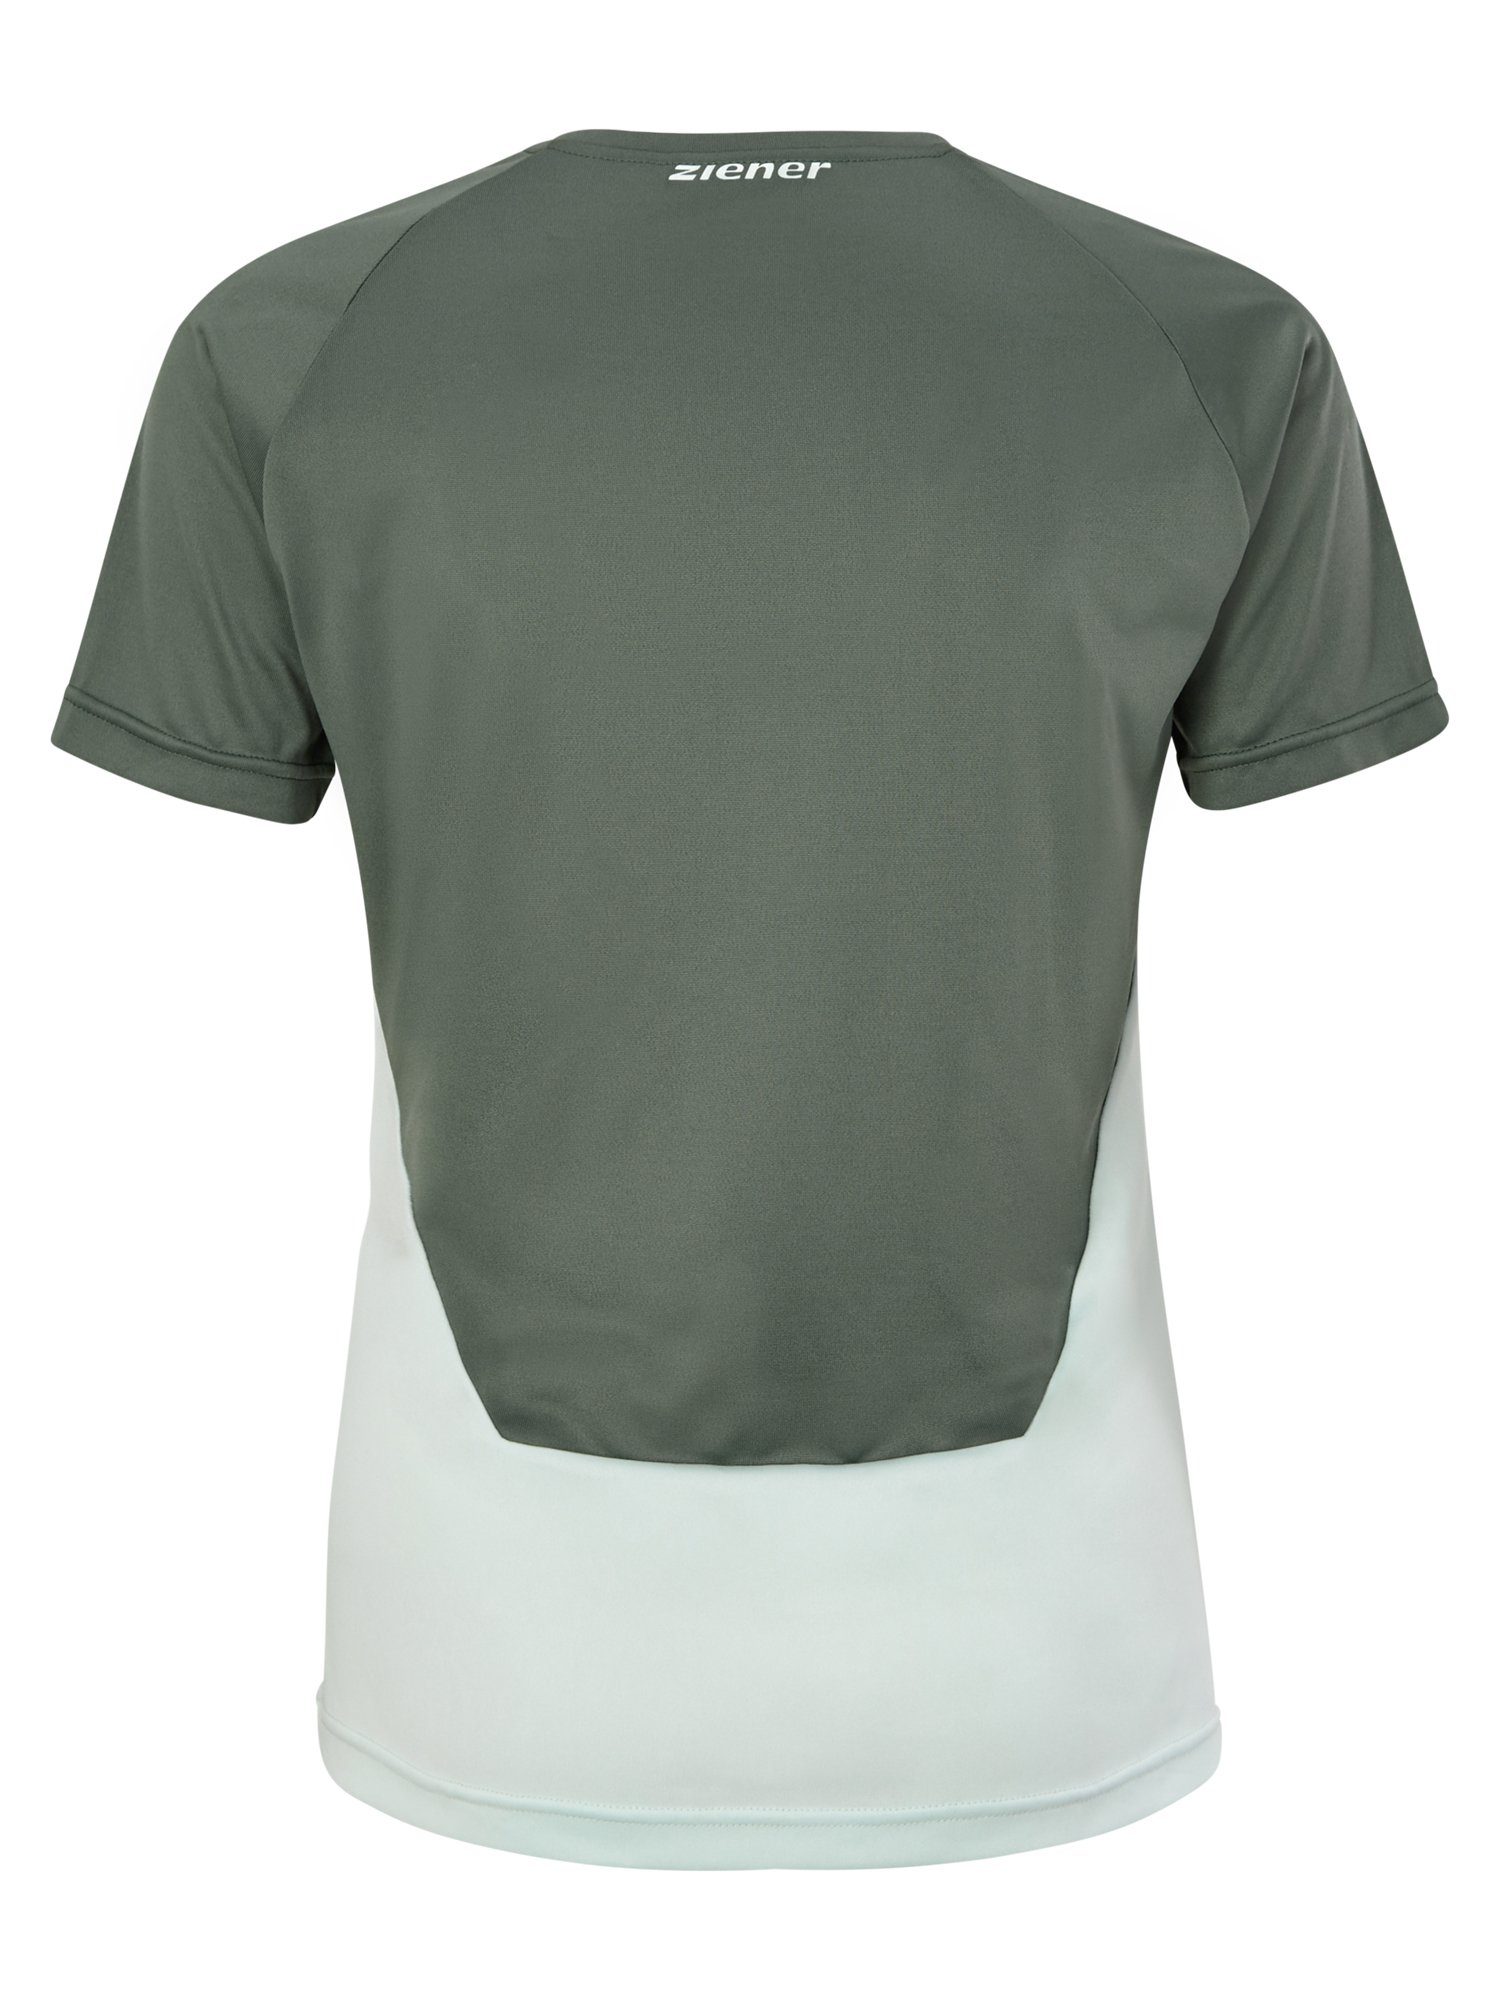 NABUCA olivgrün Ziener T-Shirt